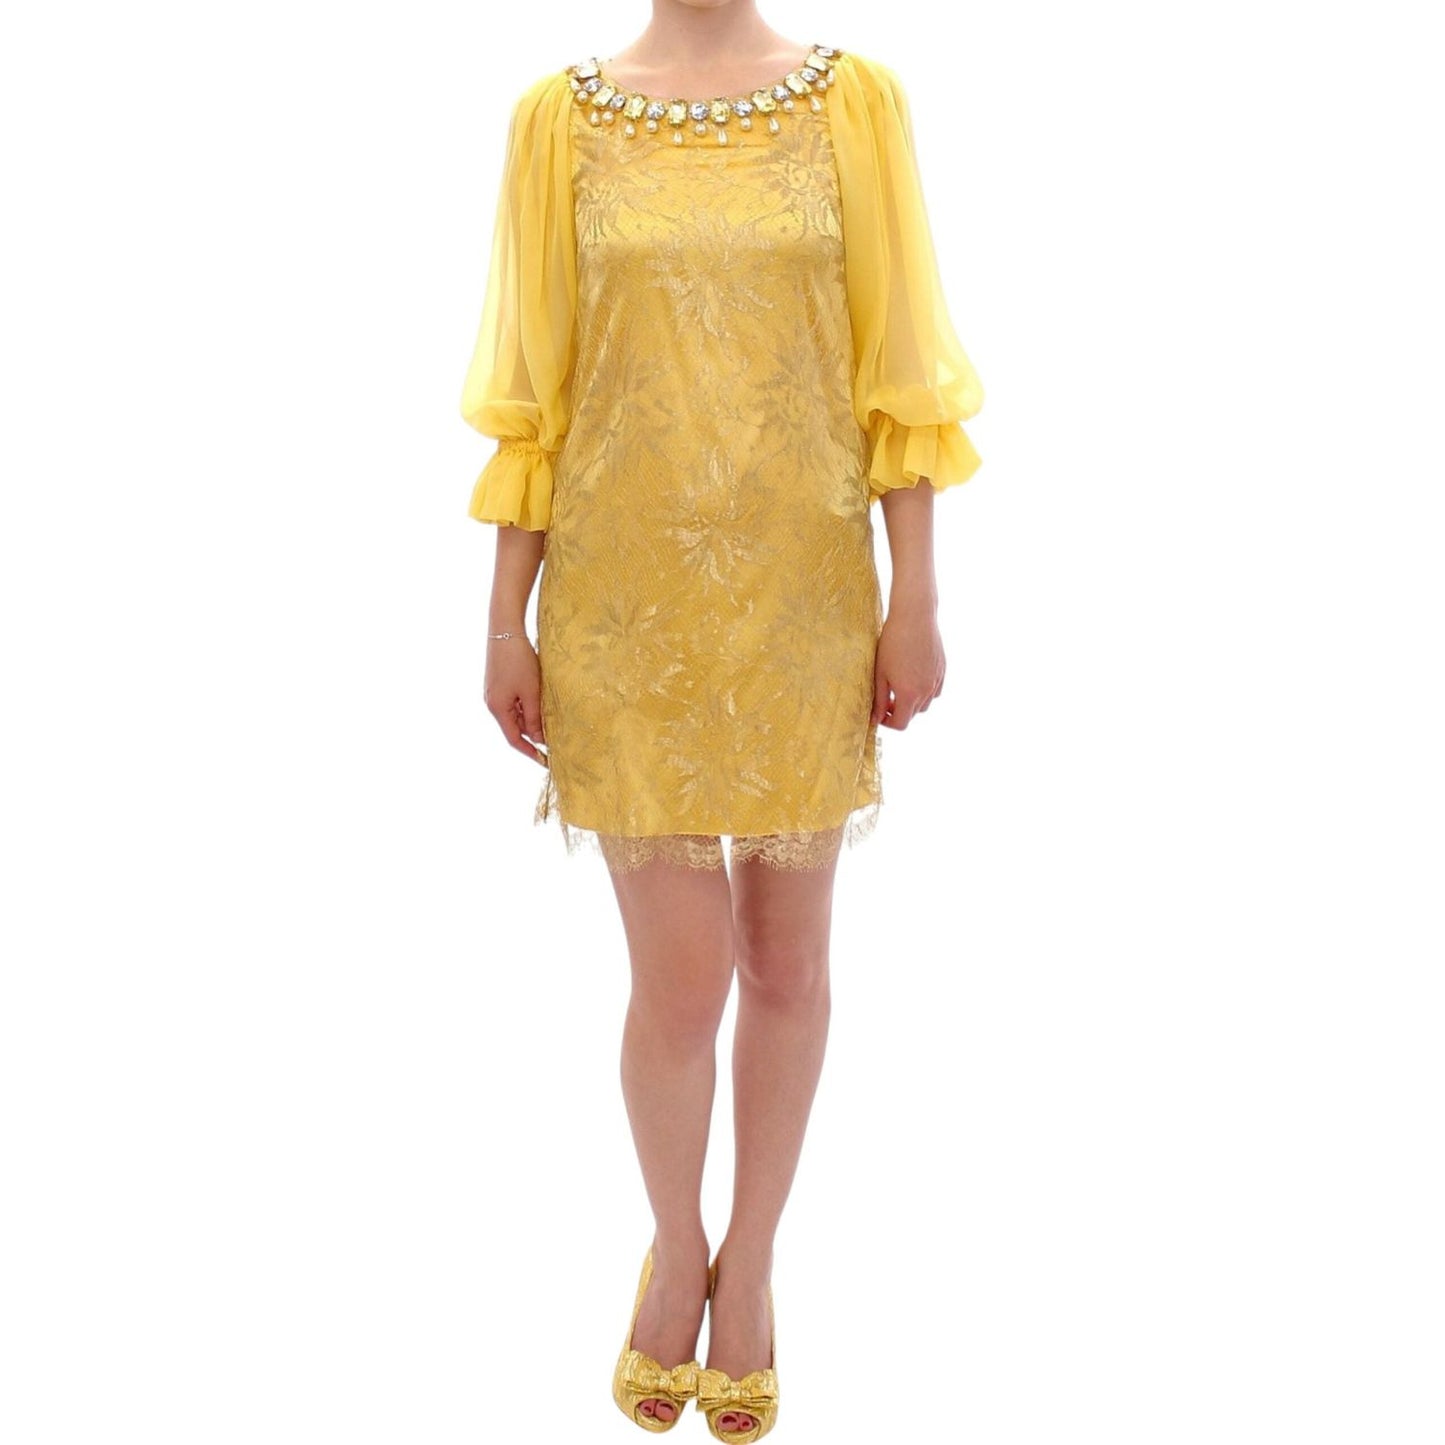 Yellow Lace Crystal Embellished Mini Dress